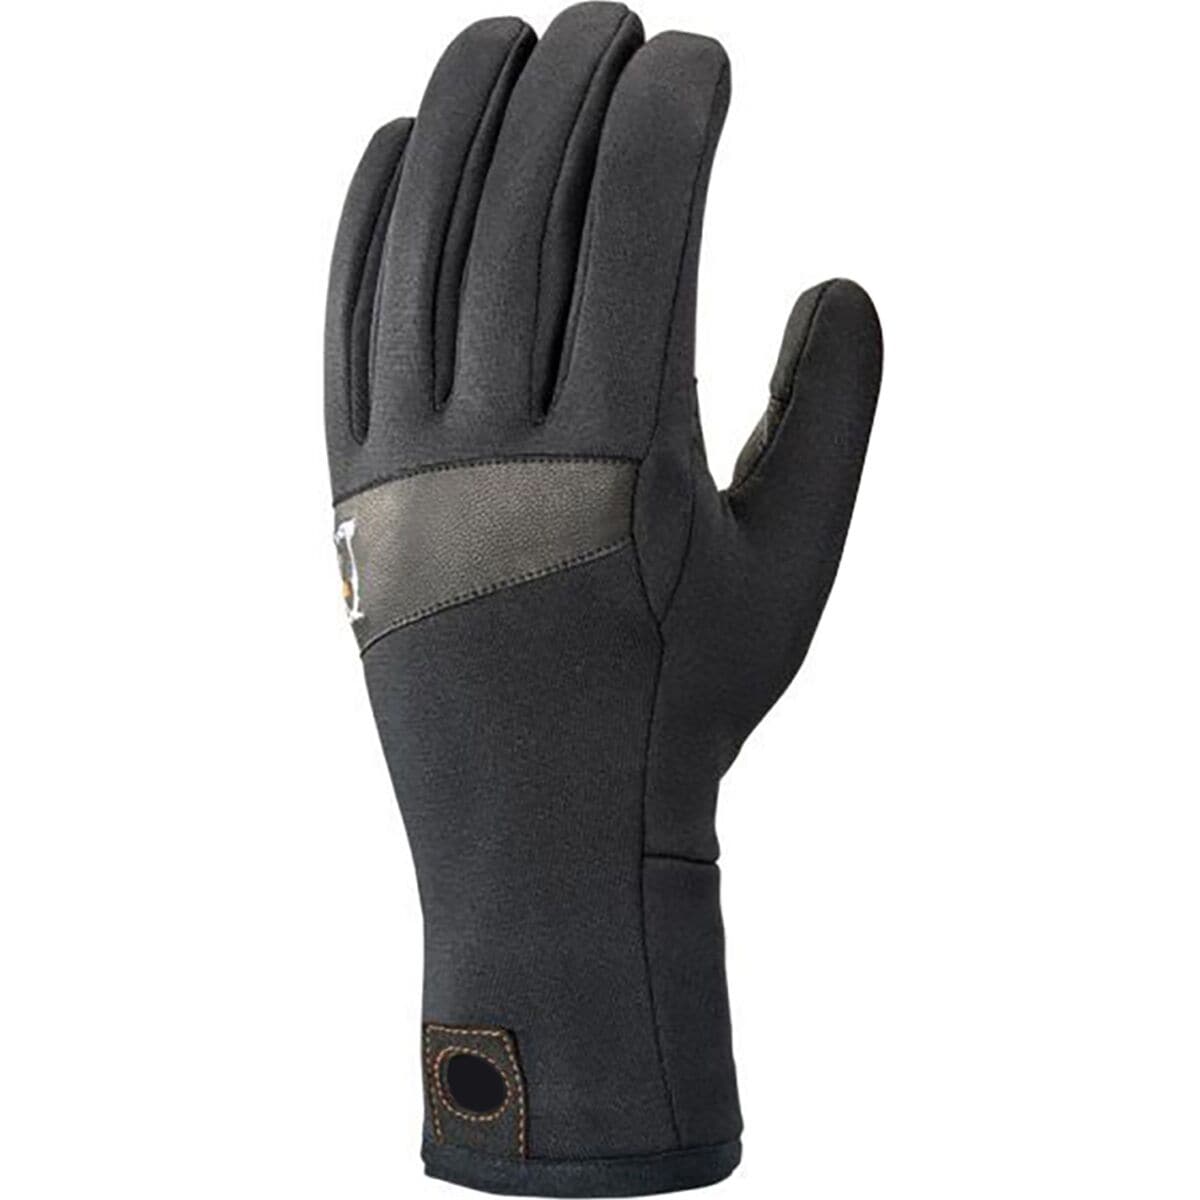 Aniiu Glove Liner - 200G Tuxedo Black